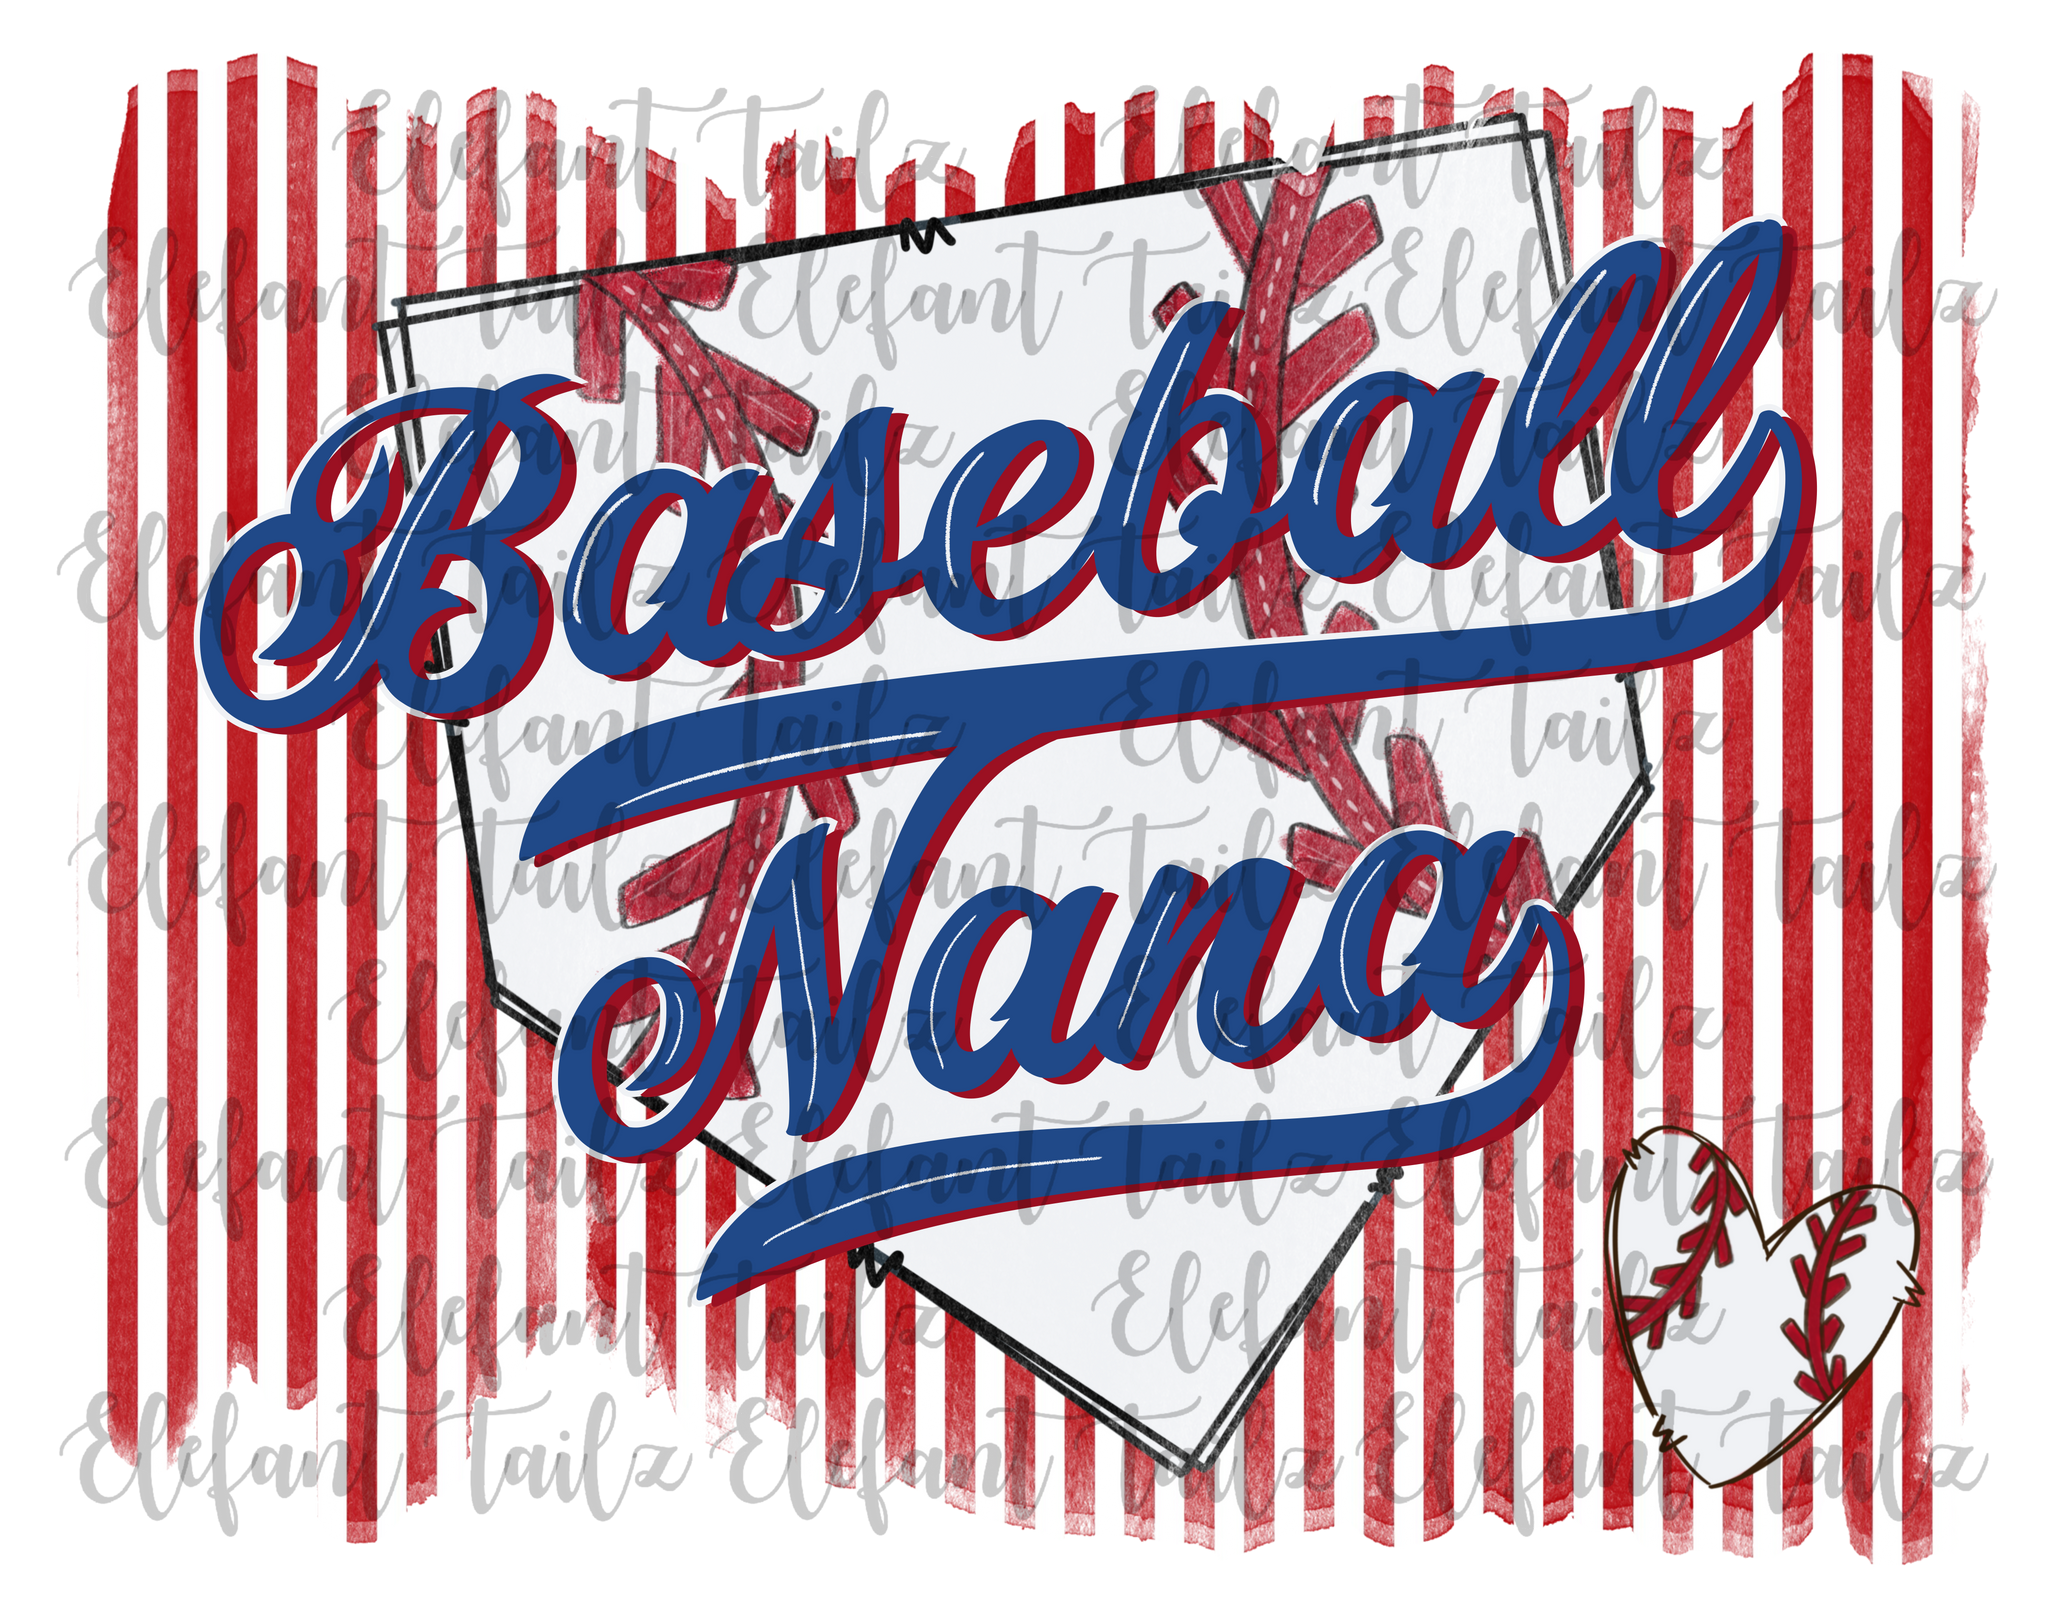 Baseball Nana Striped Background